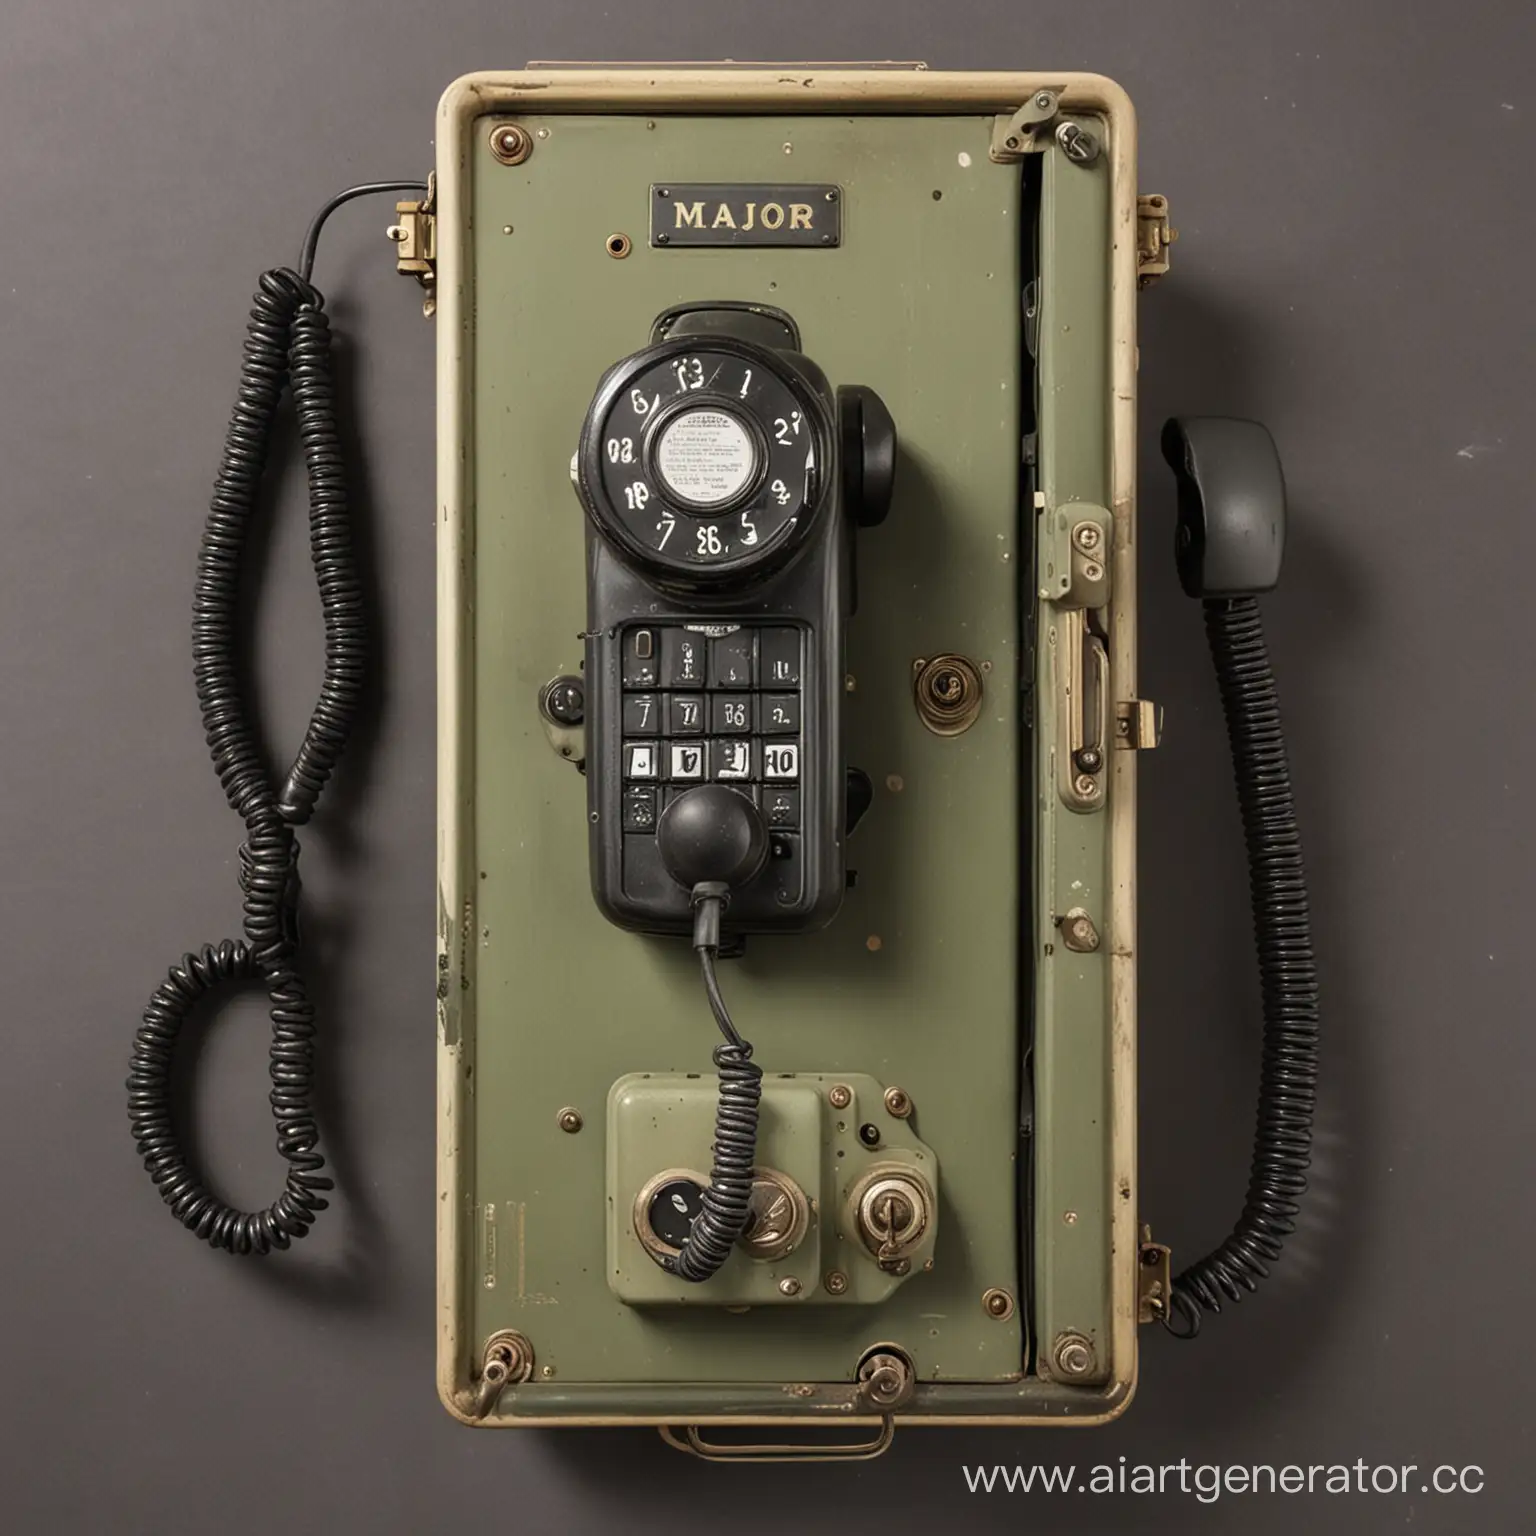  military door phone with  major's shoulder straps